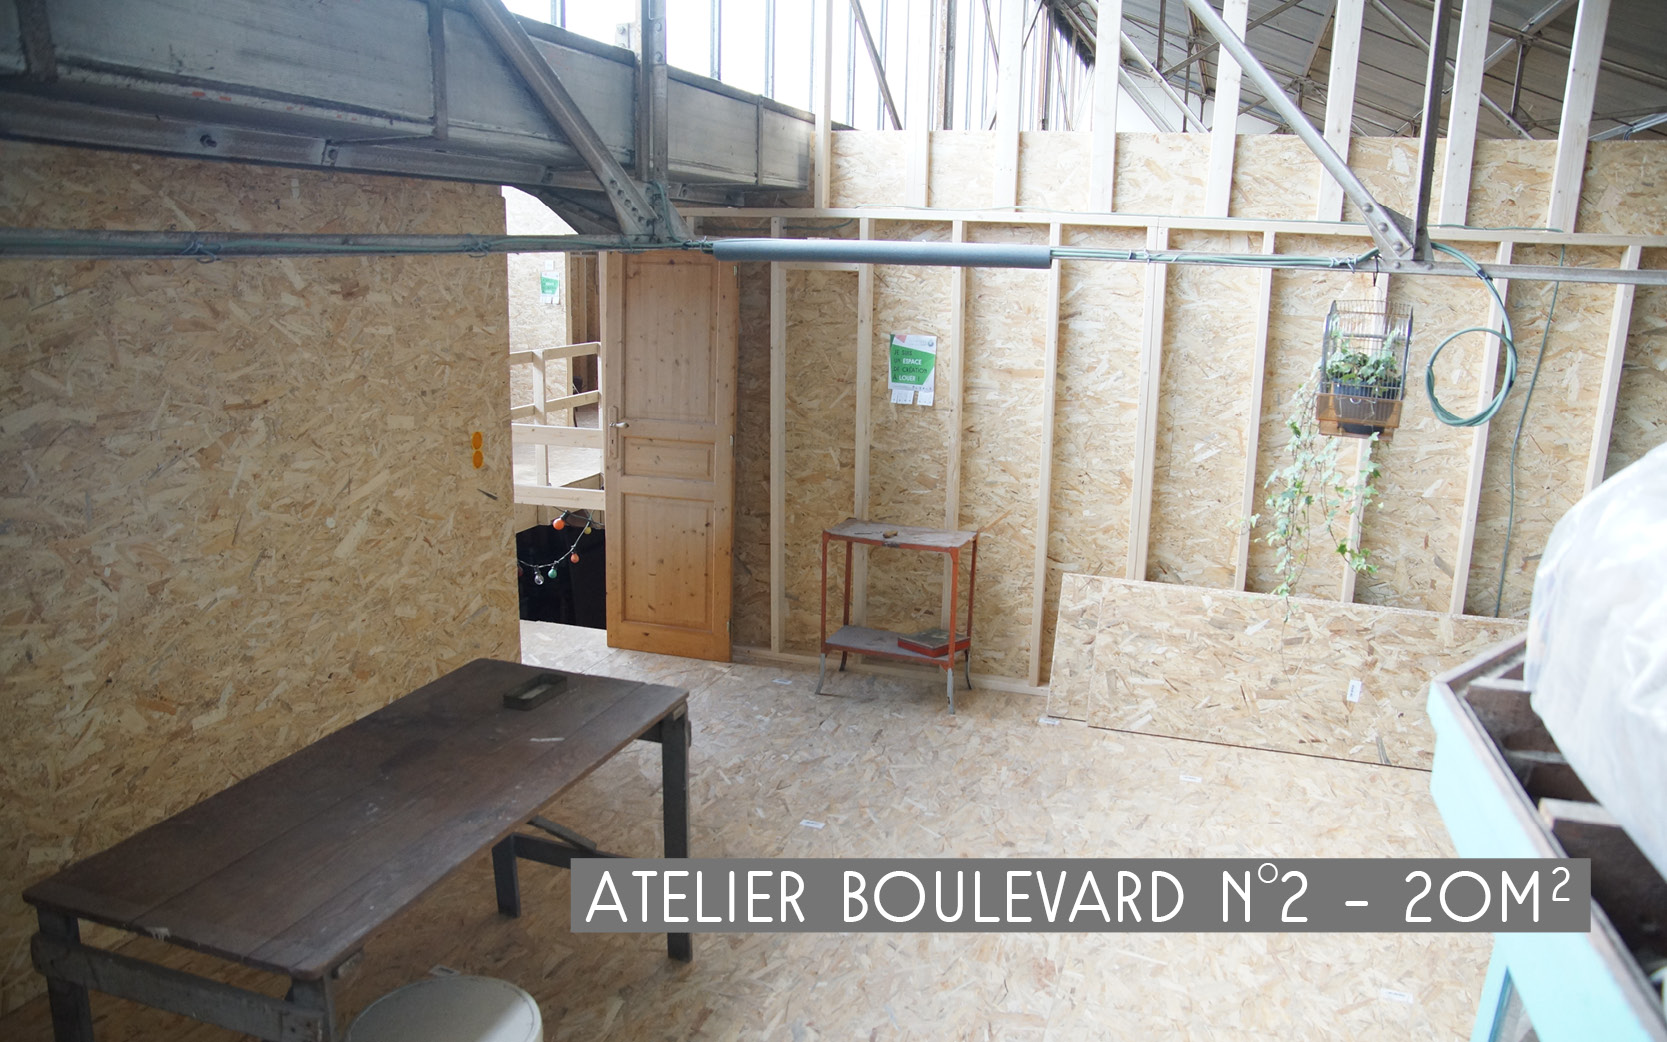 Atelier Boulevard 20m2 1